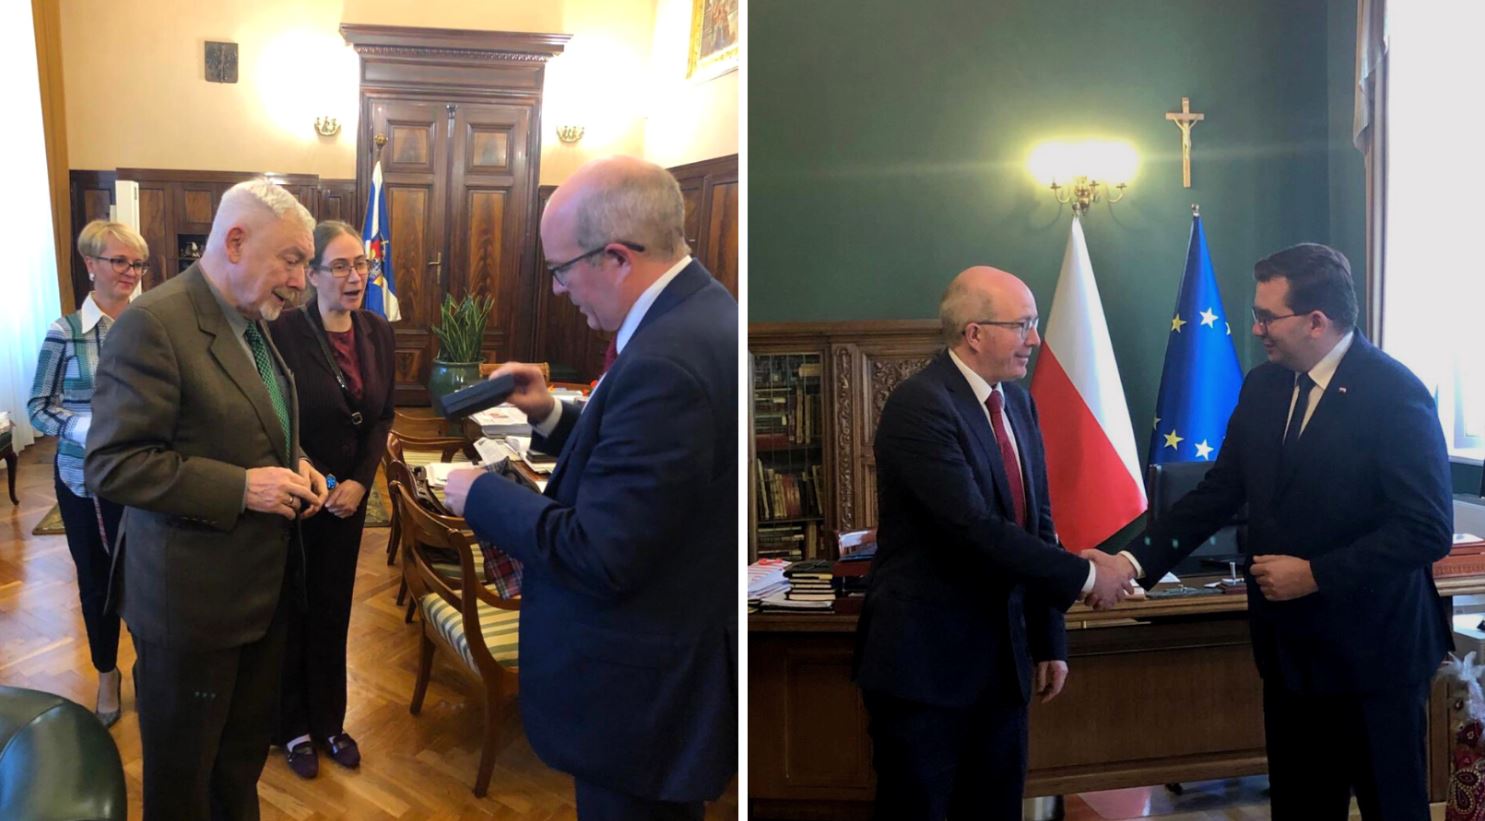 Ambassador Haughey visited Kraków on 19-20 October